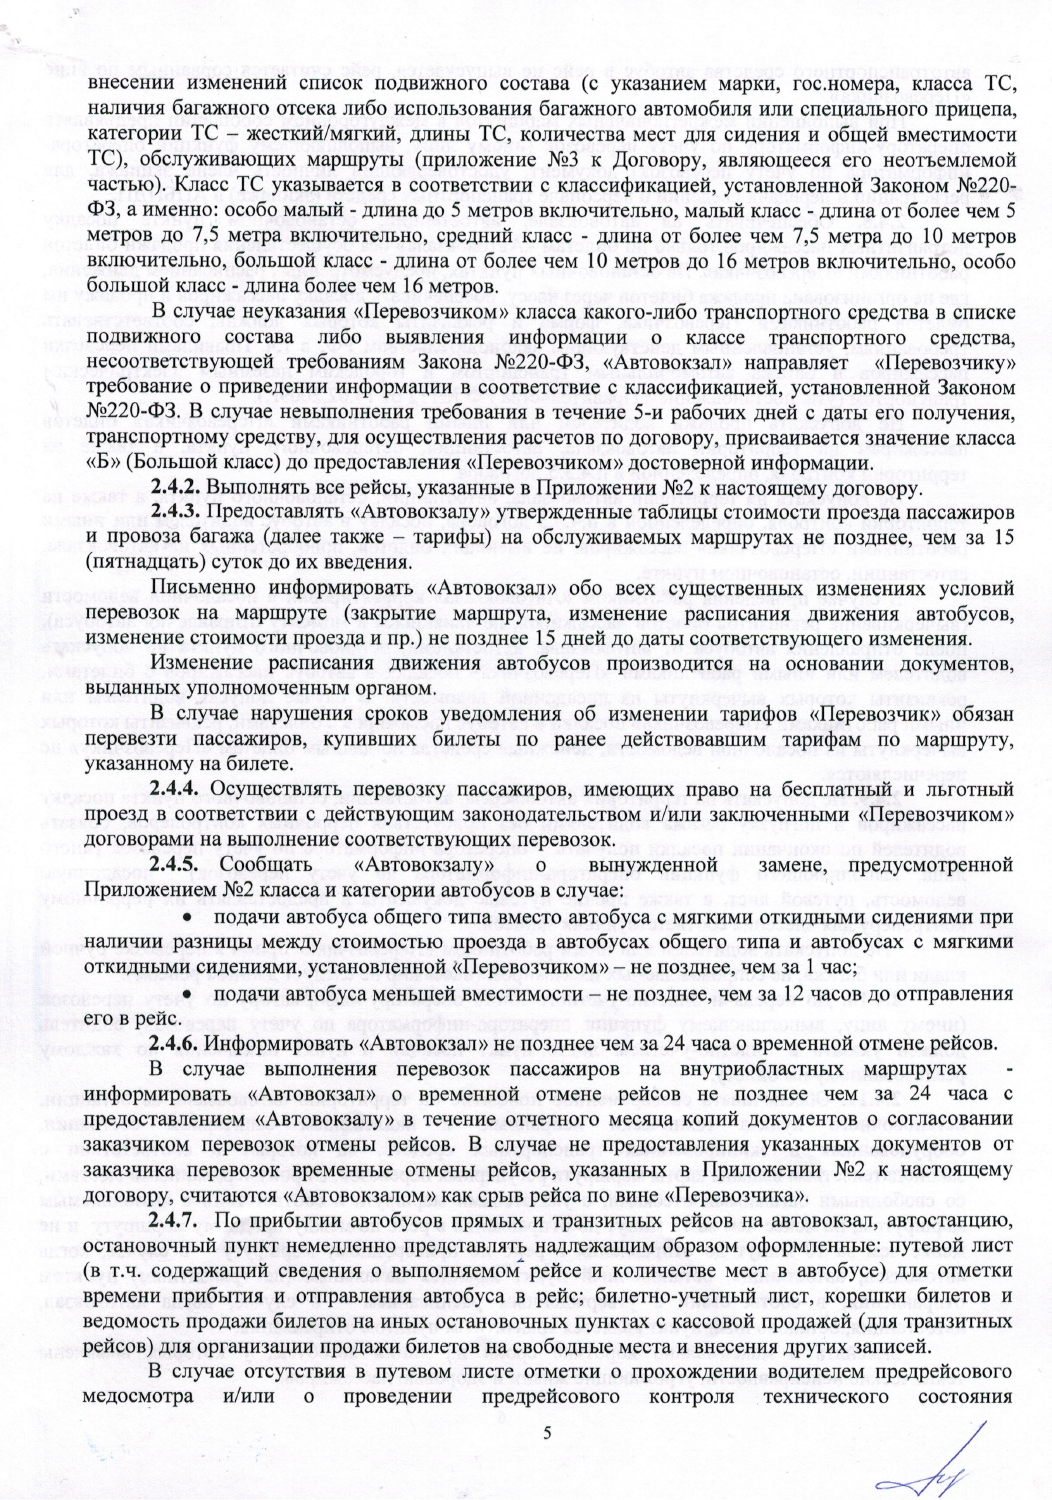 Договор ГУП владимиский вокзал-5.jpg